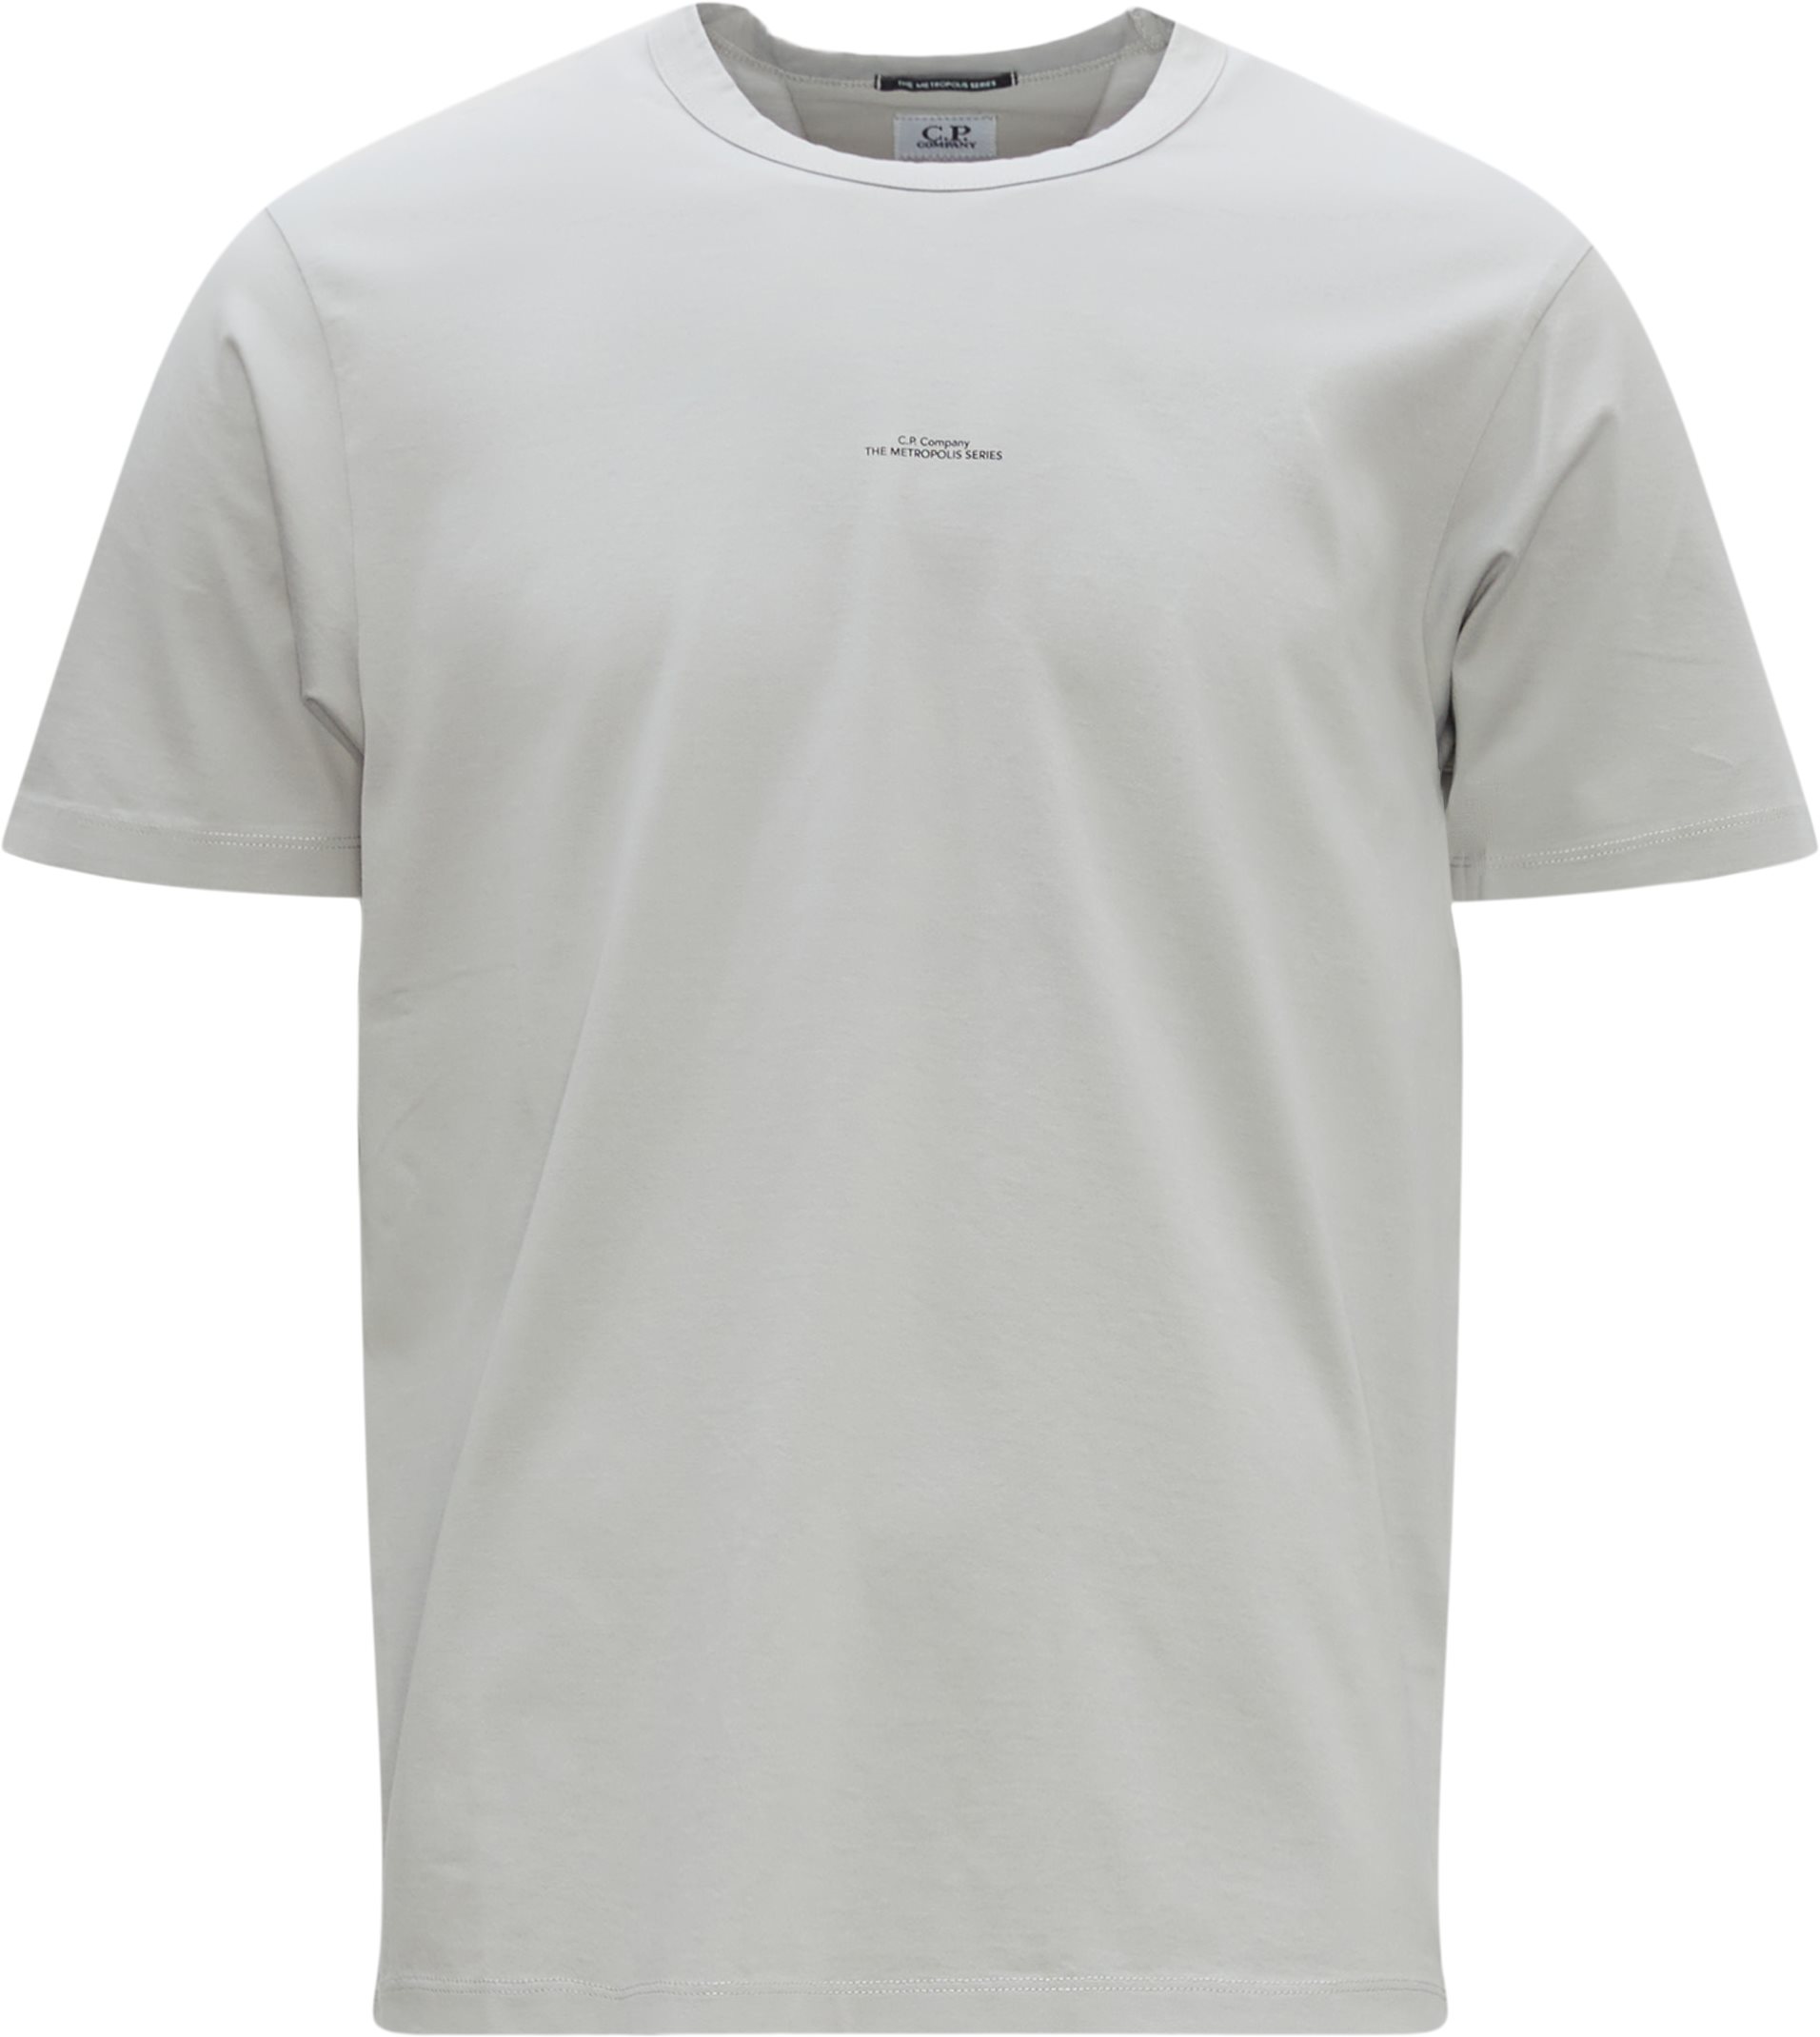 C.P. Company T-shirts TS198A 6370W Grey